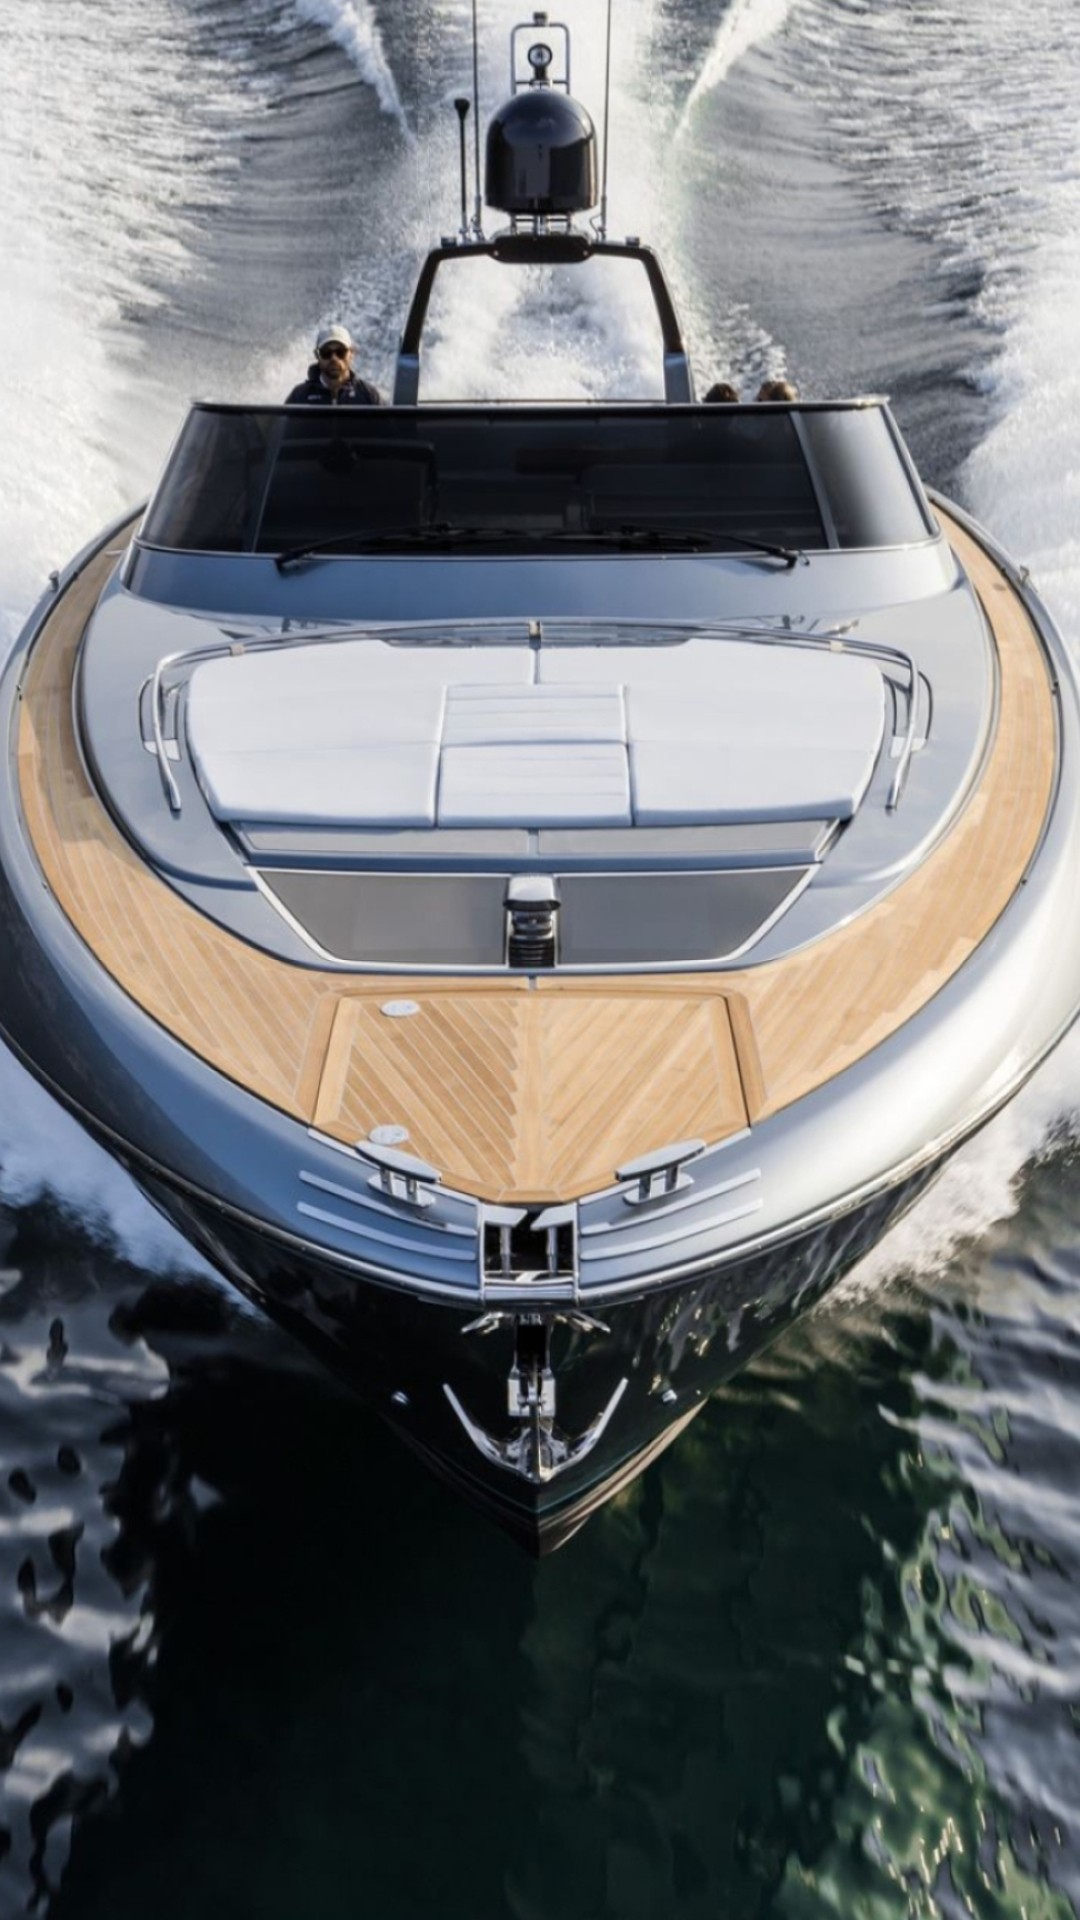 Pleasure Boat: Riva 56' Rivale Yacht, Luxury water vehicle for leisure. 1080x1920 Full HD Wallpaper.